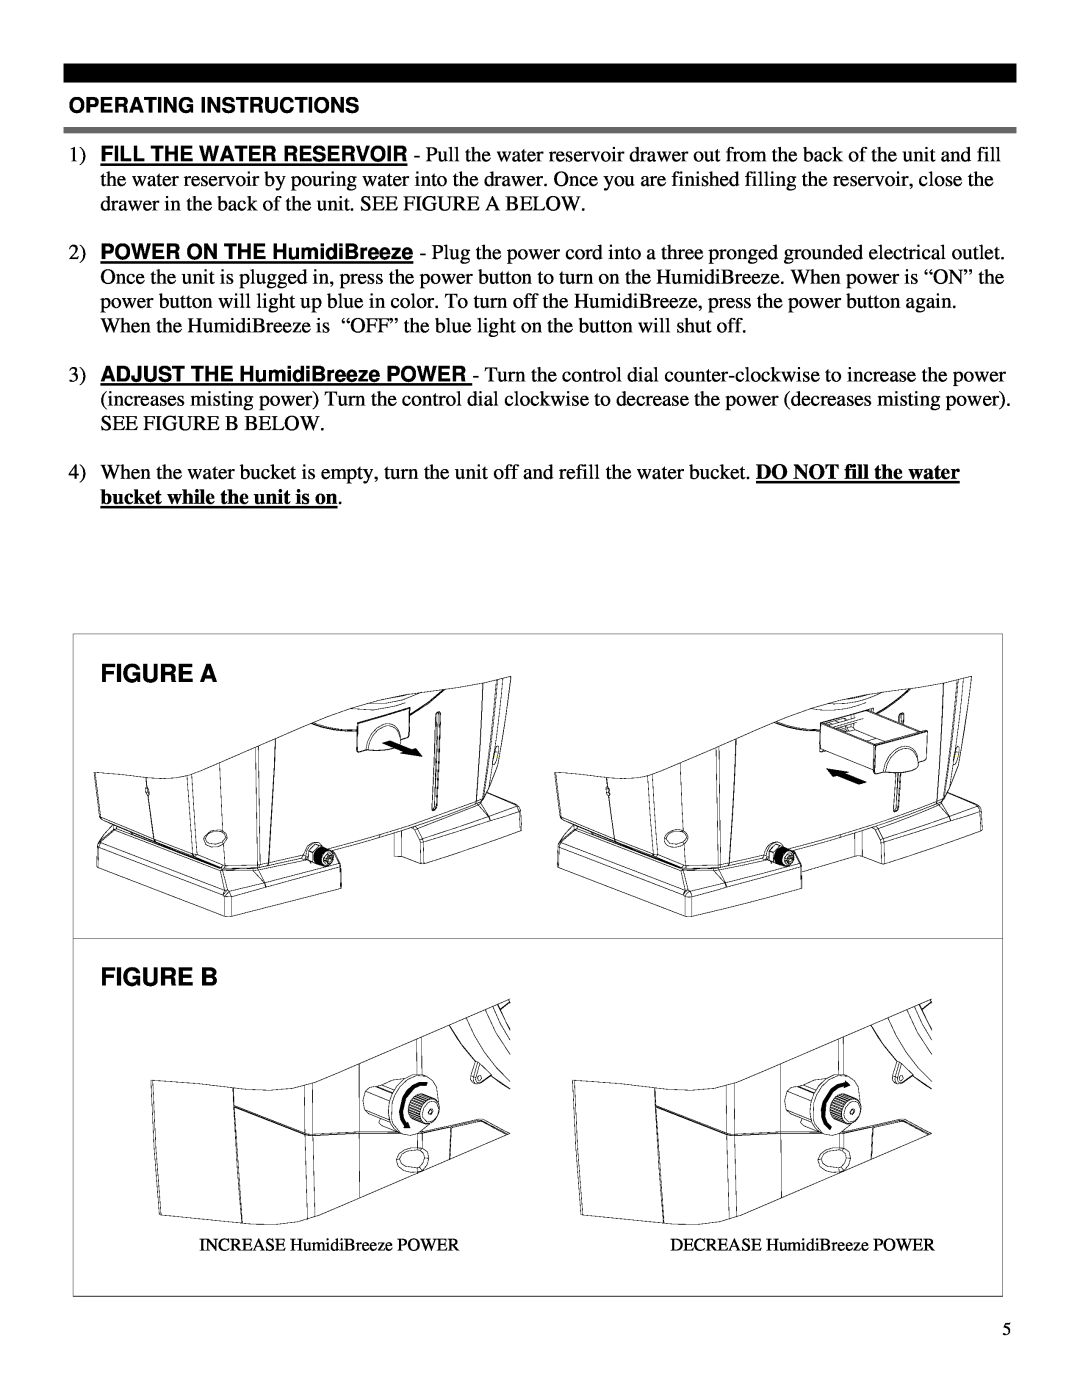 Soleus Air MT1-19-33 operating instructions Figure A, Figure B, Operating Instructions 